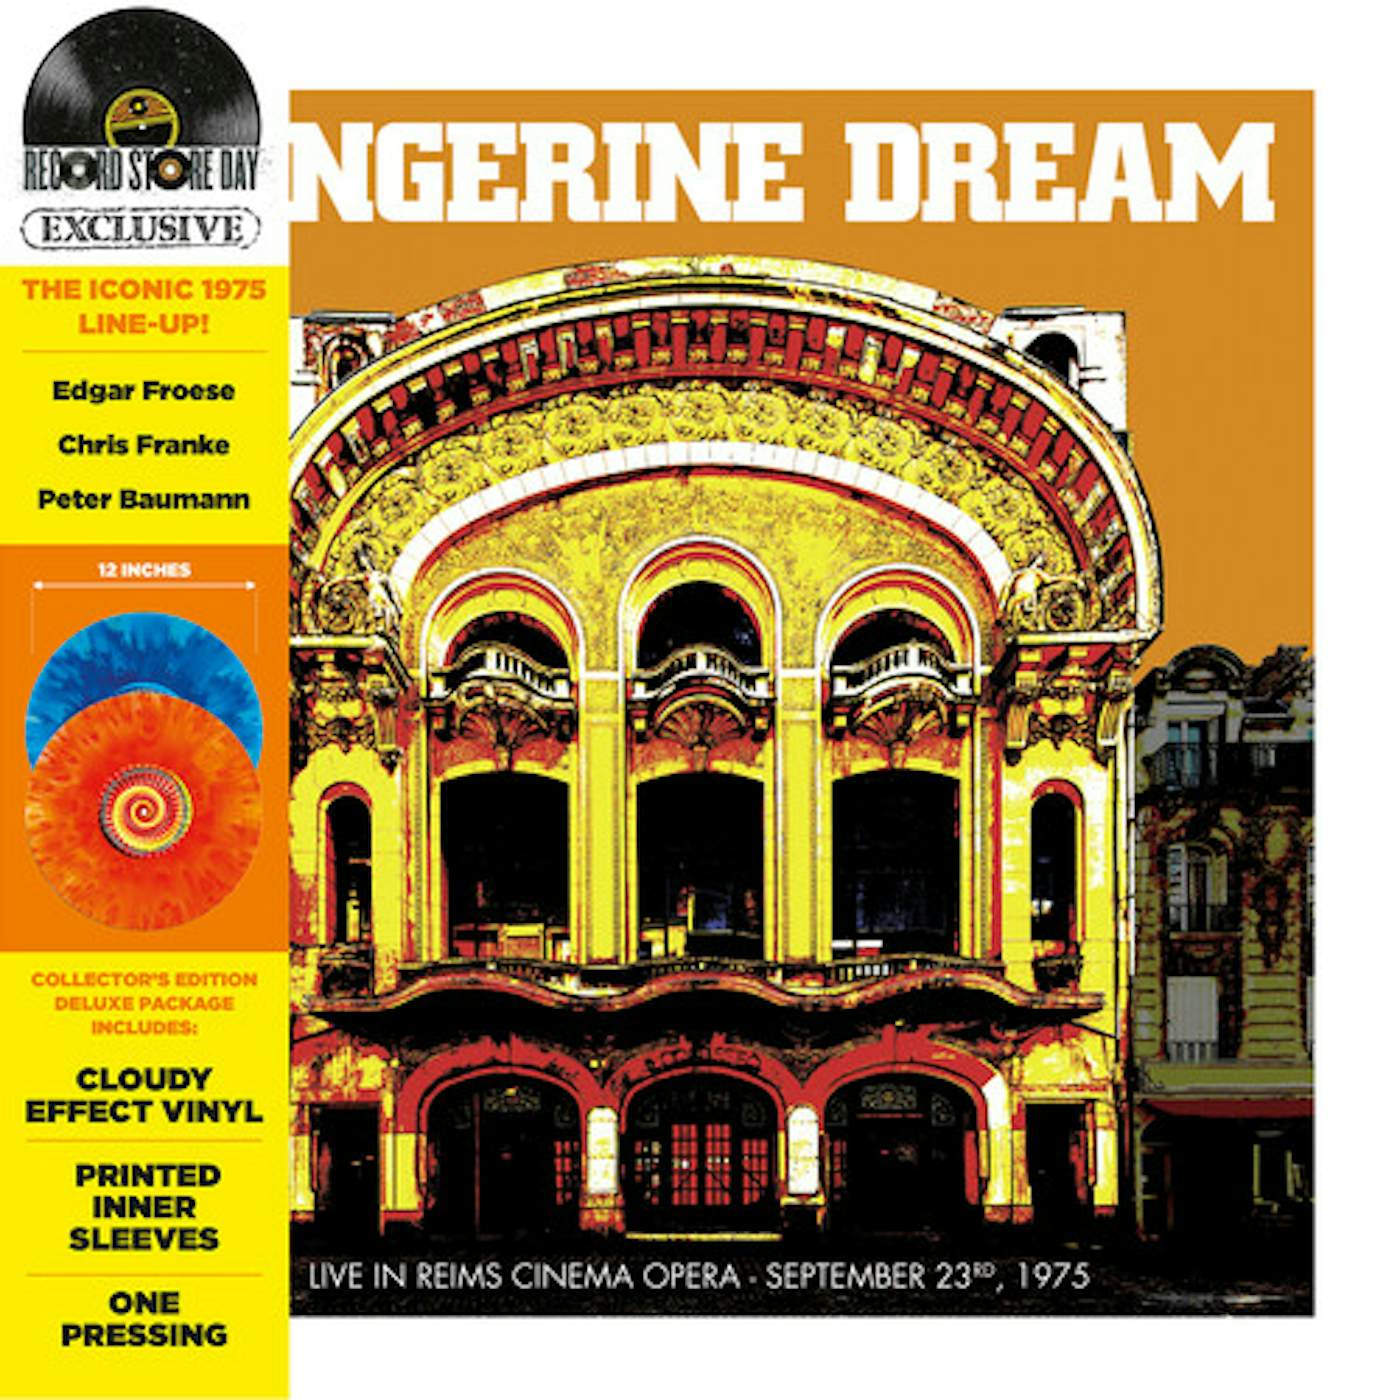 Tangerine Dream LIVE AT REIMS CINEMA OPERA (SEPT. 23RD 1975) Vinyl Record